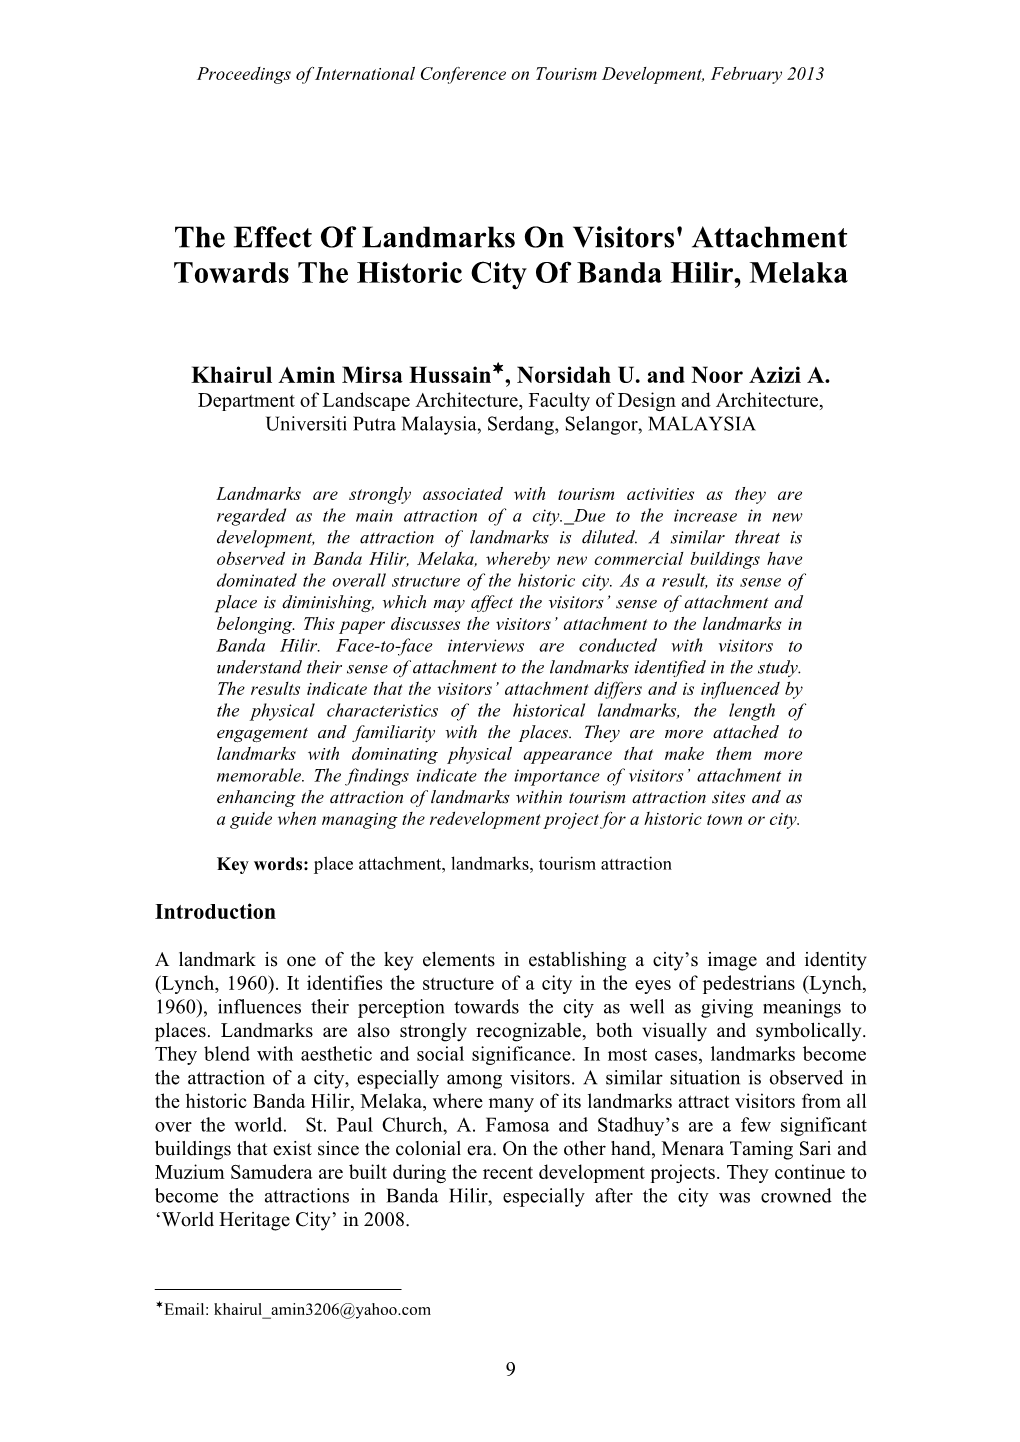 The Effect of Landmarks on Visitors' Attachment Towards the Historic City of Banda Hilir, Melaka